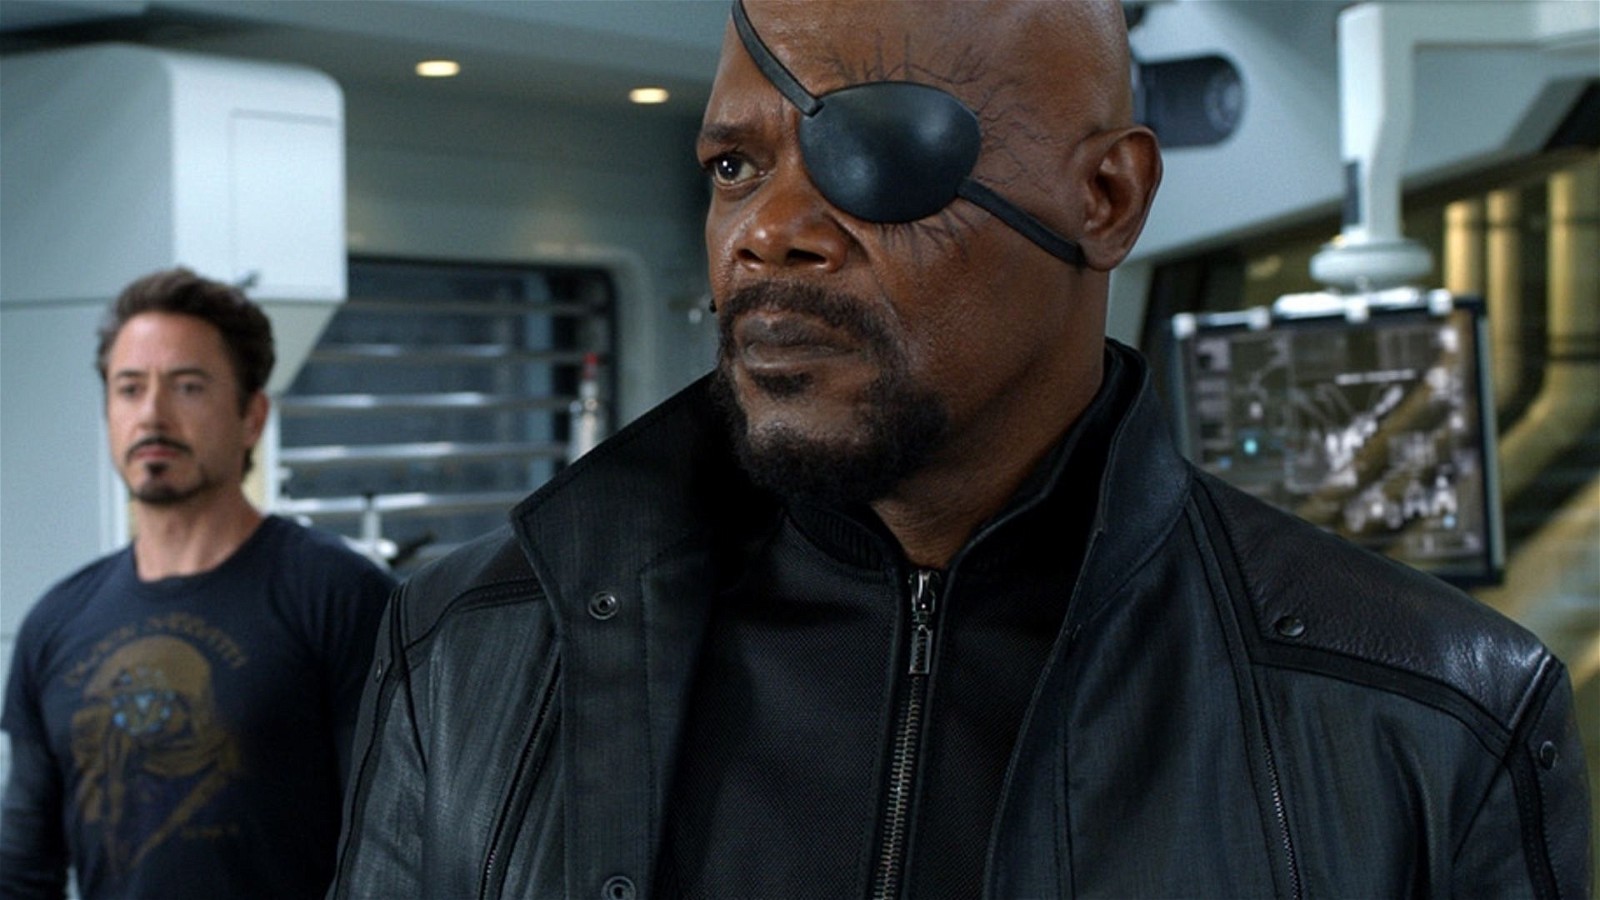 Samuel L. Jackson as Nick Fury alongside Robert Downey Jr. 